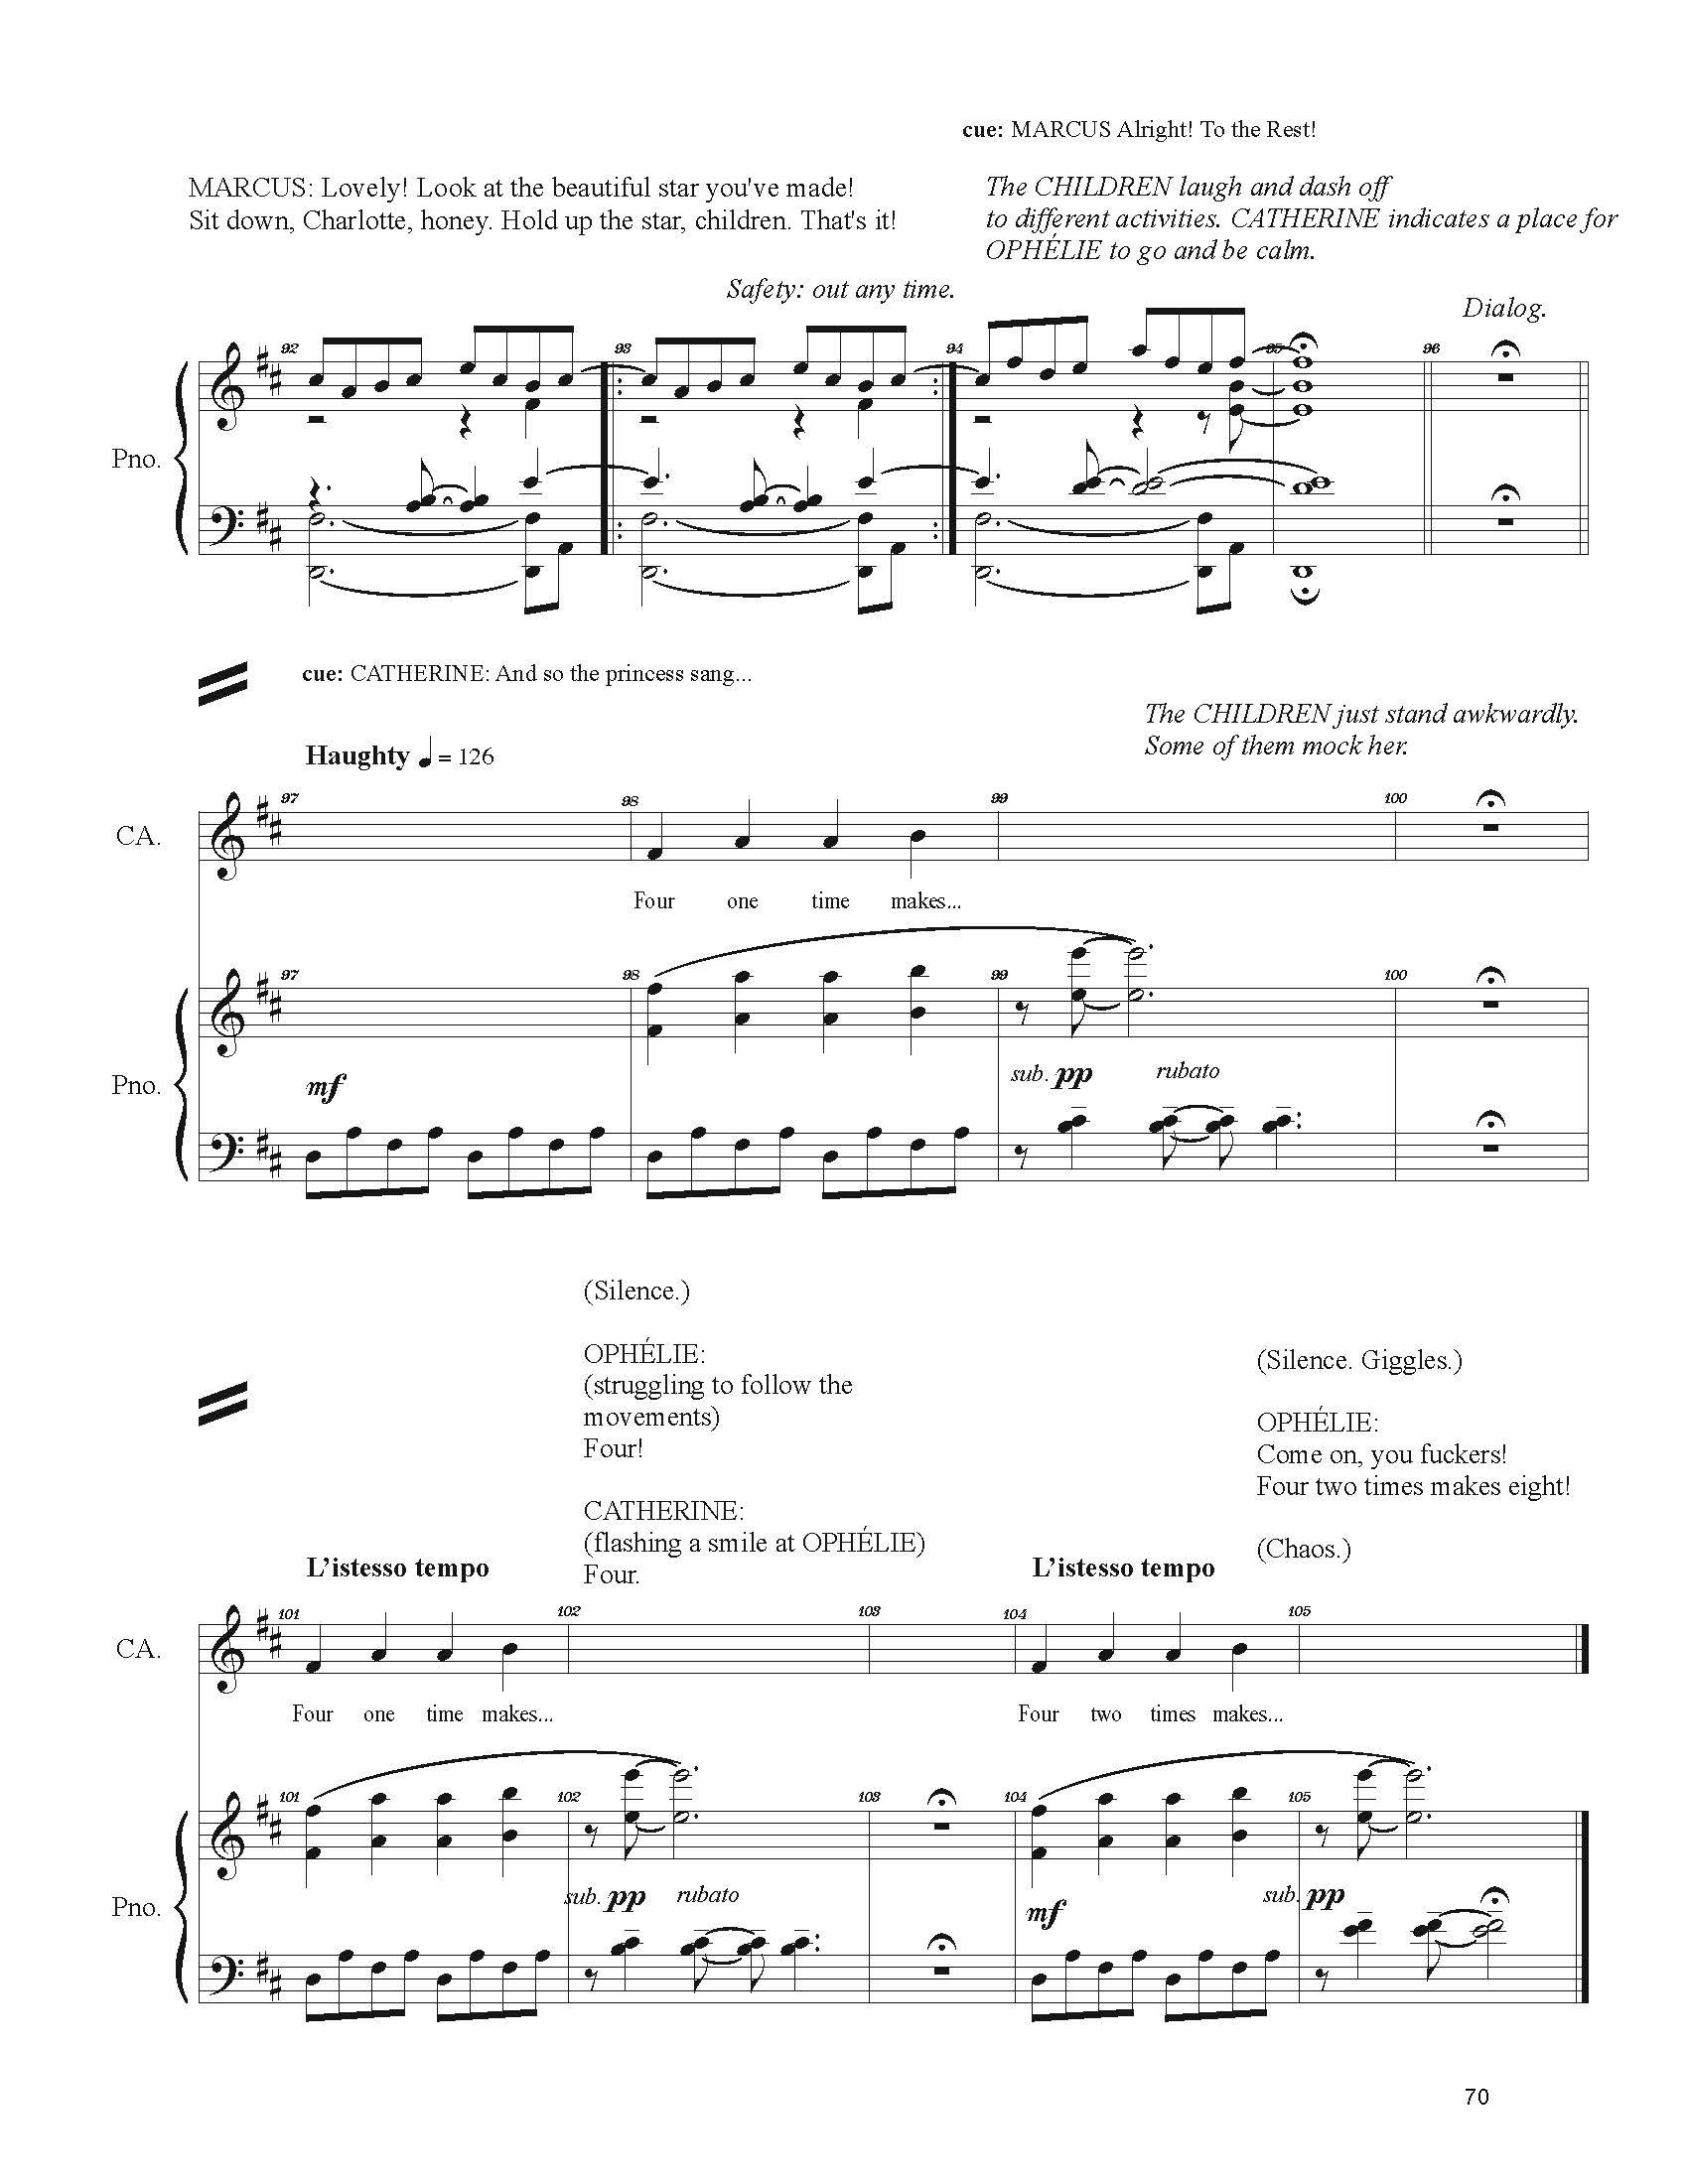 FULL PIANO VOCAL SCORE DRAFT 1 - Score_Page_070.jpg